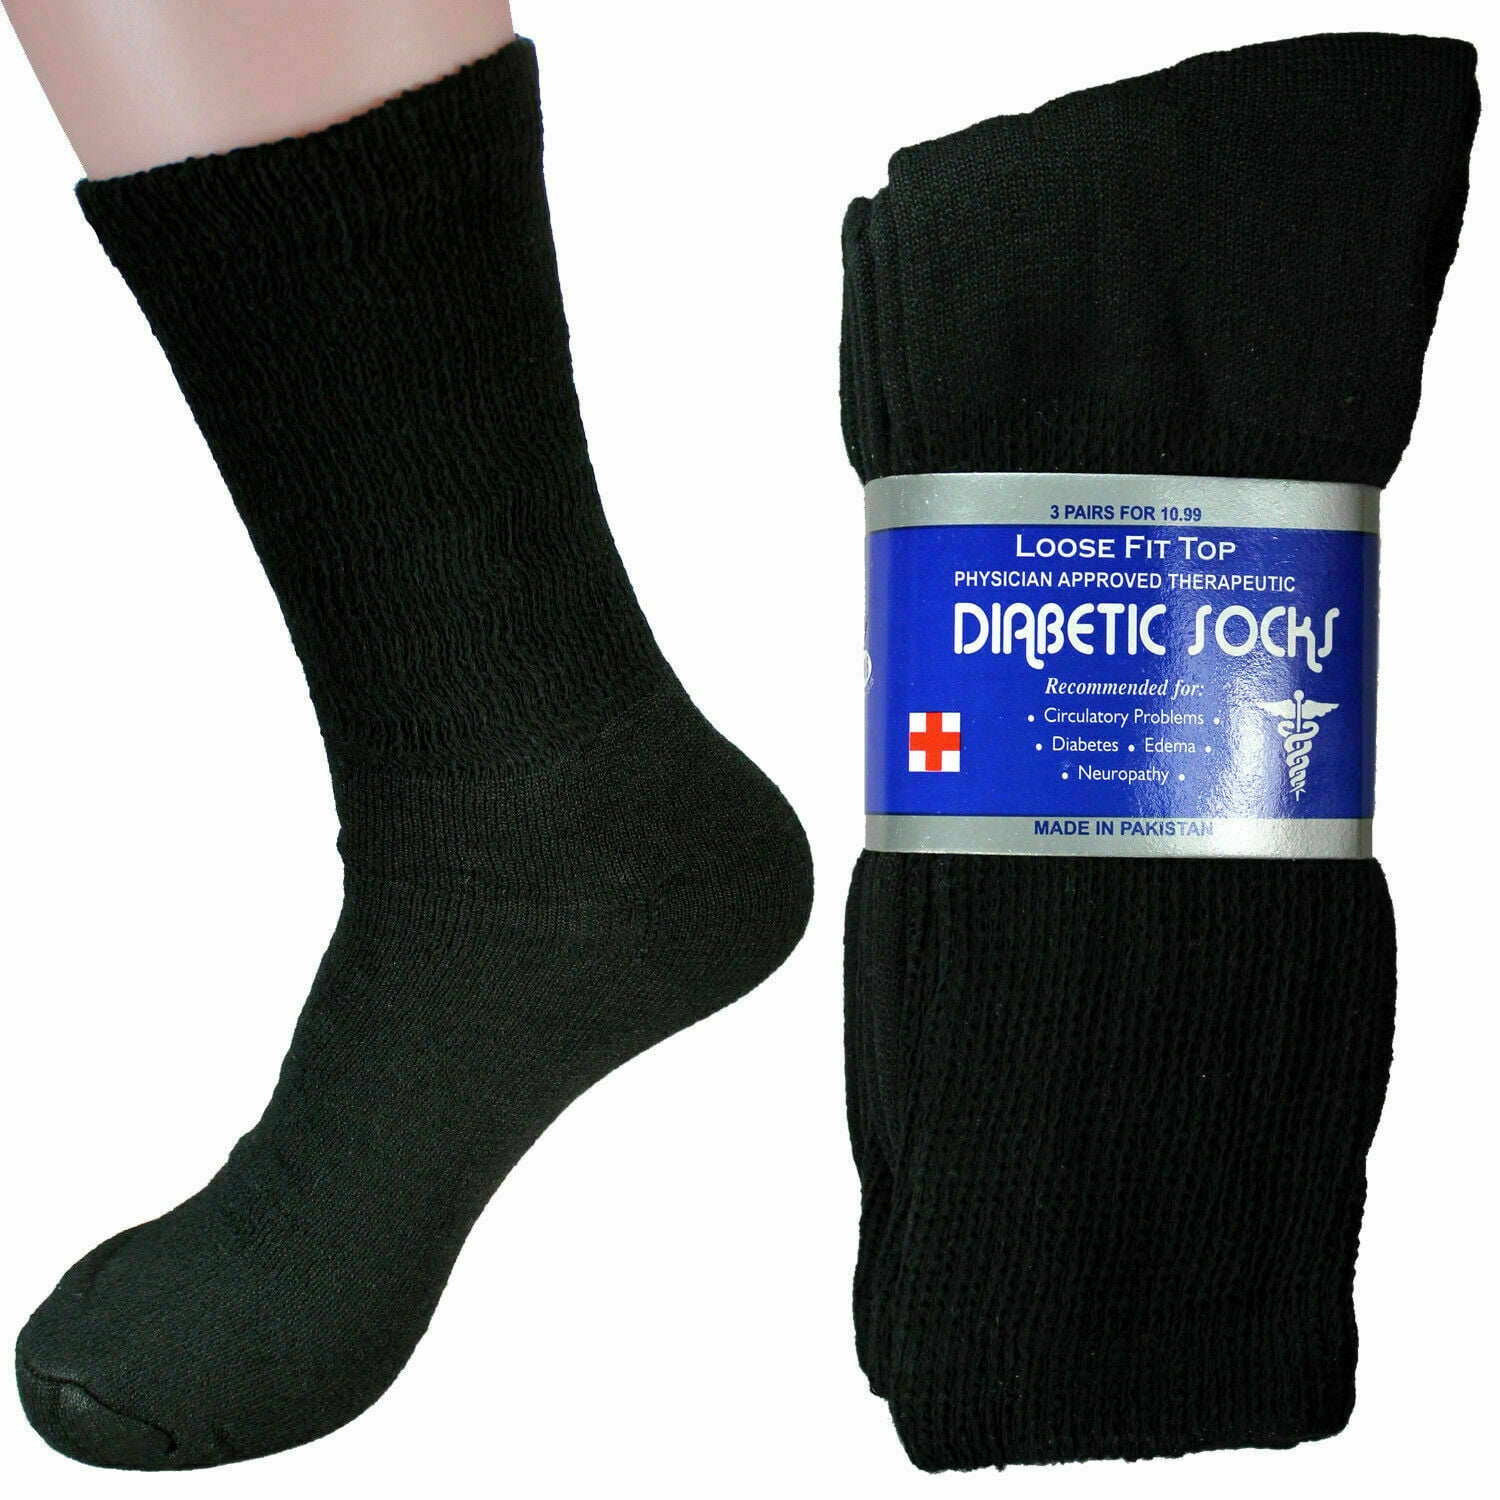 New Diabetic Crew Socks Circulatory Health Cotton Loose Fit Top 3 Pairs